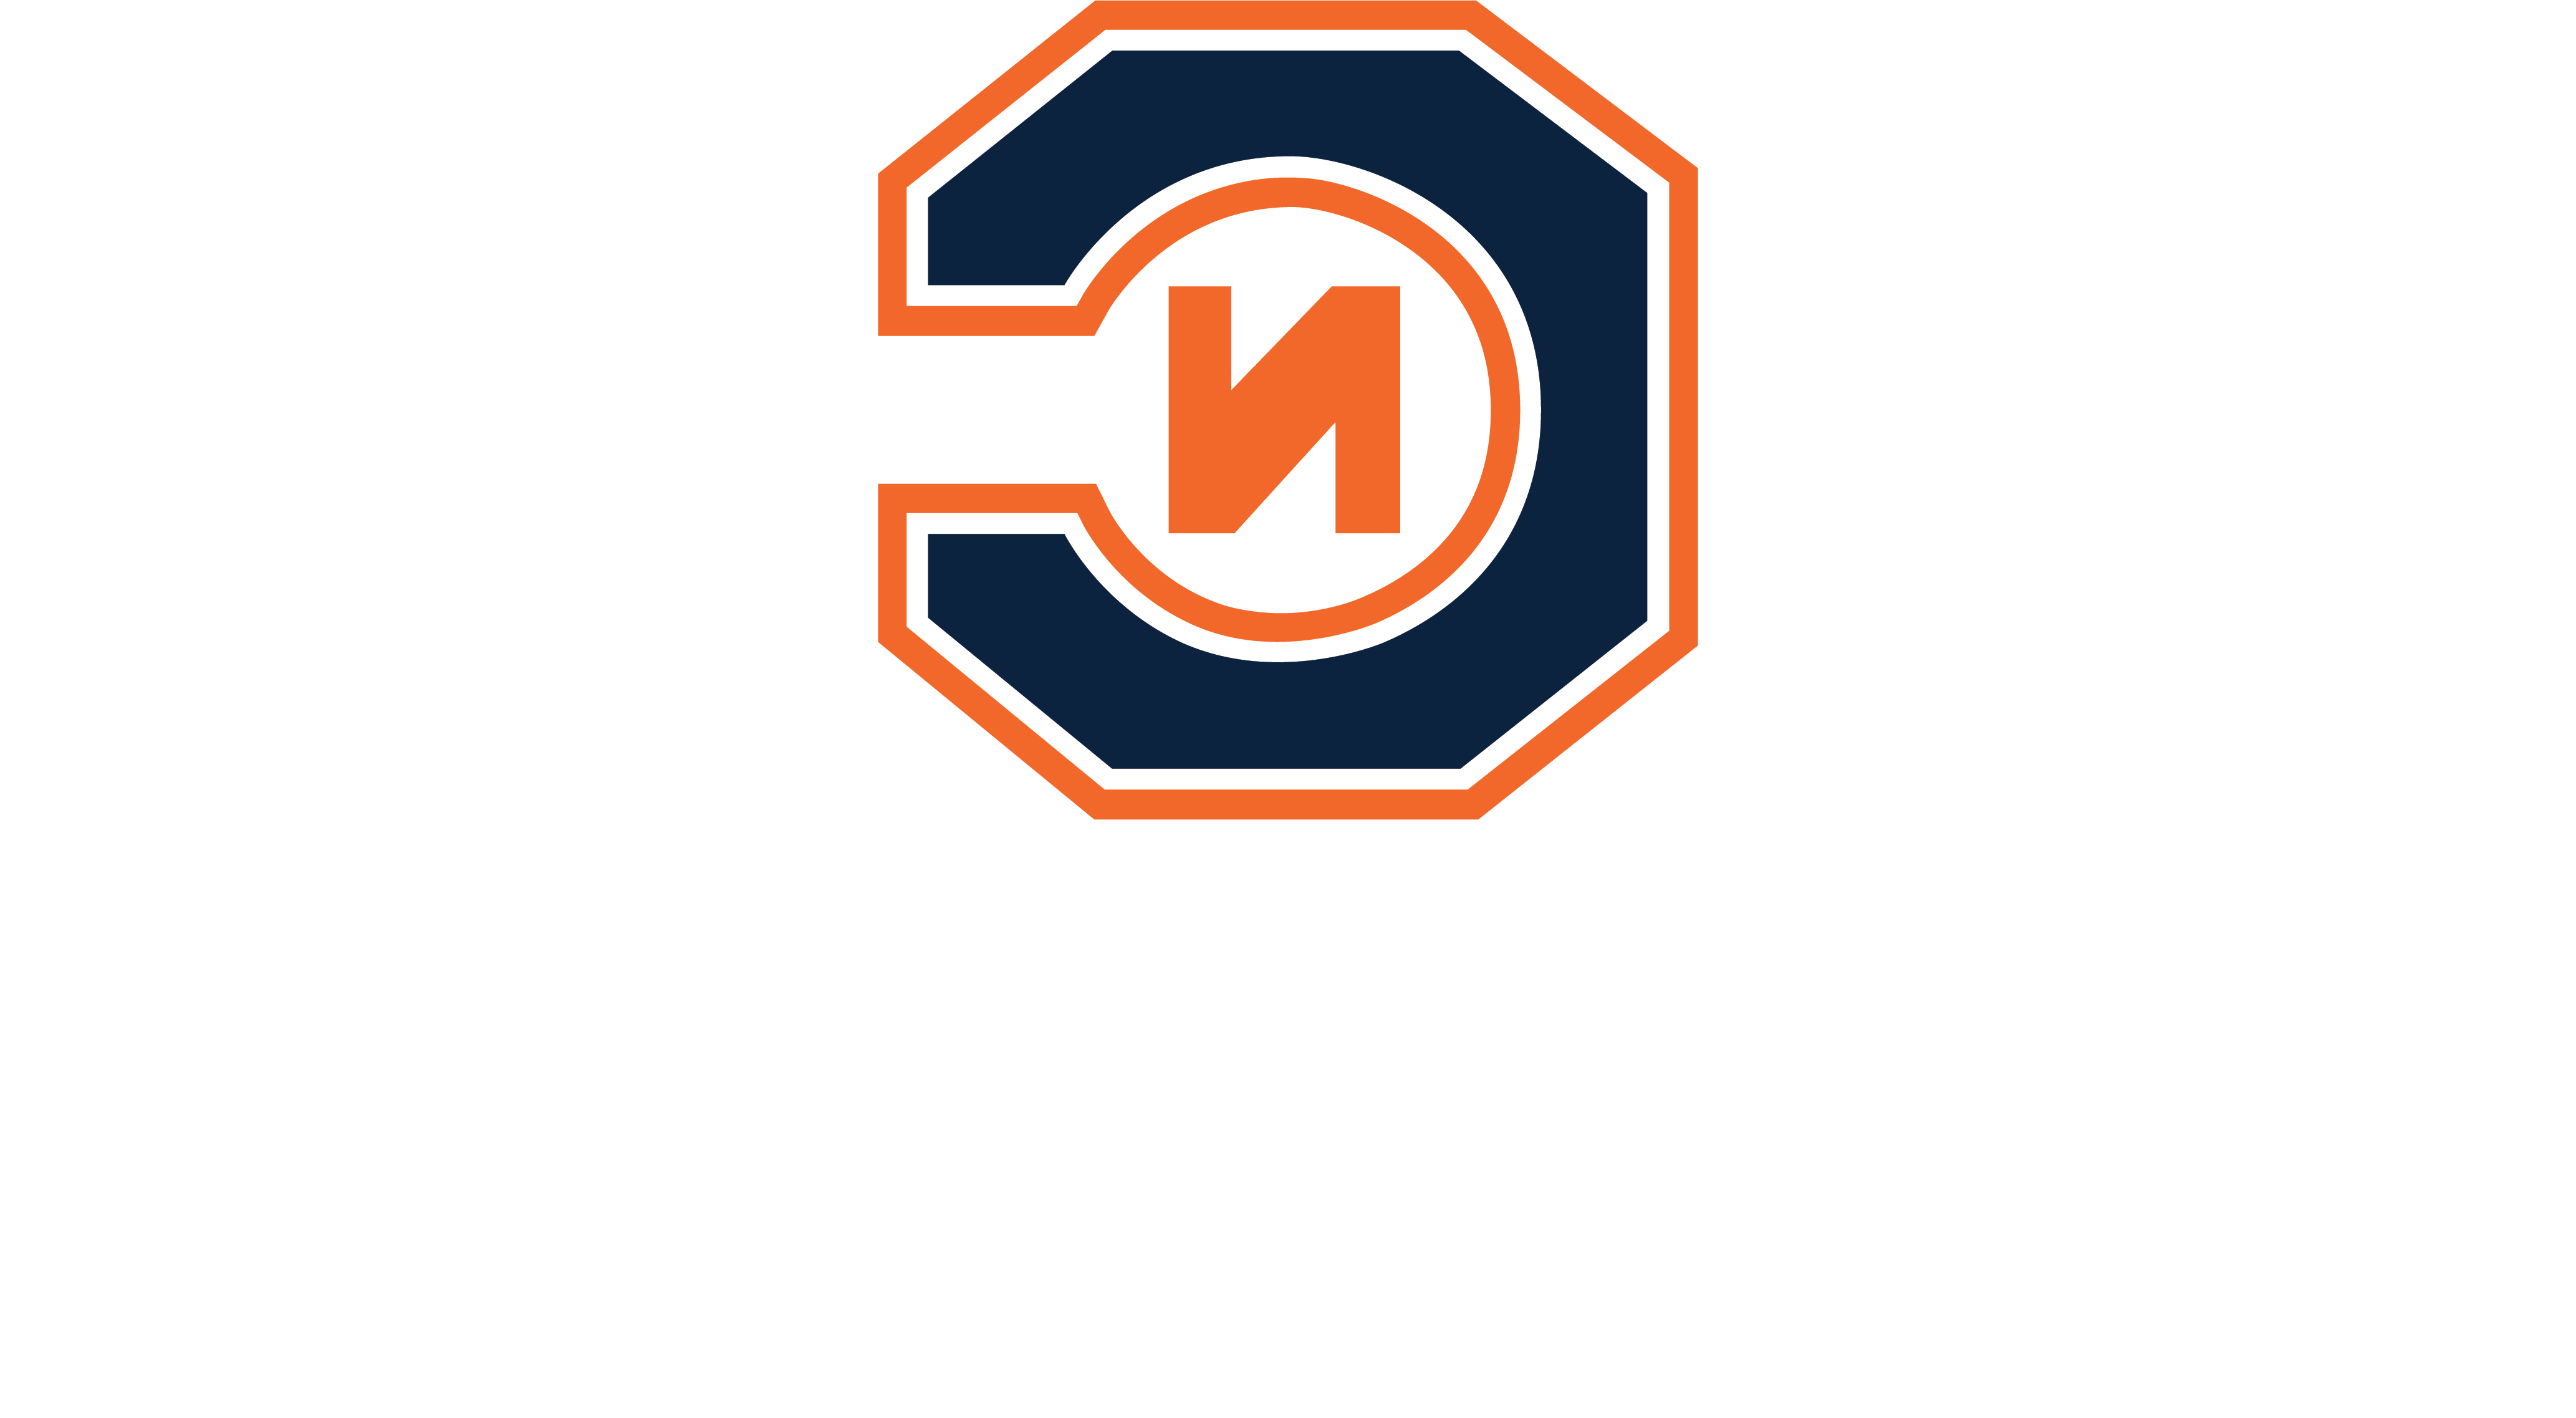 Carson Newman University Logo